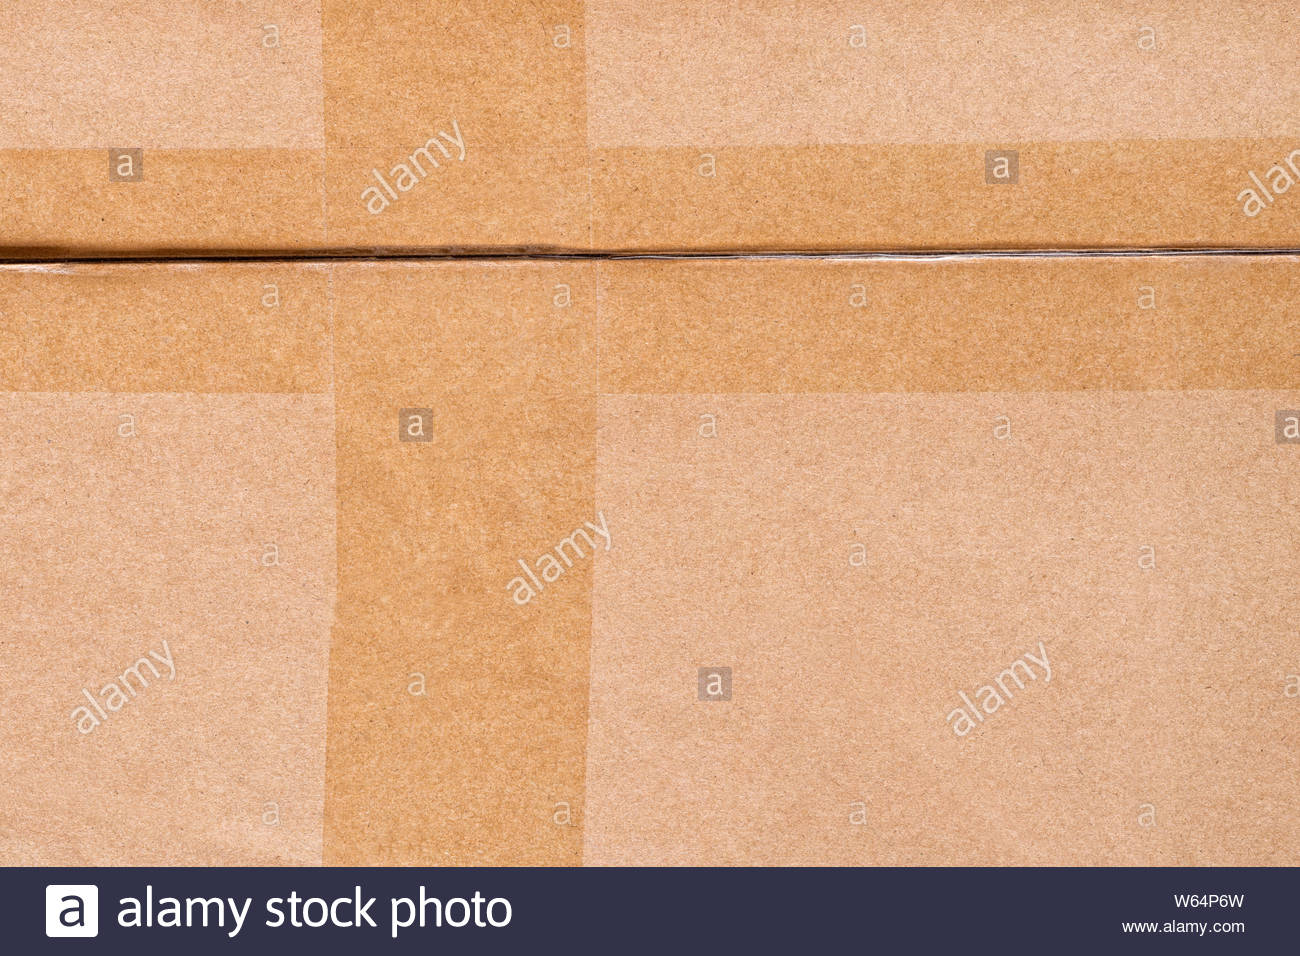 Texture Cardboard Adhesive Tape Background Stock Photos